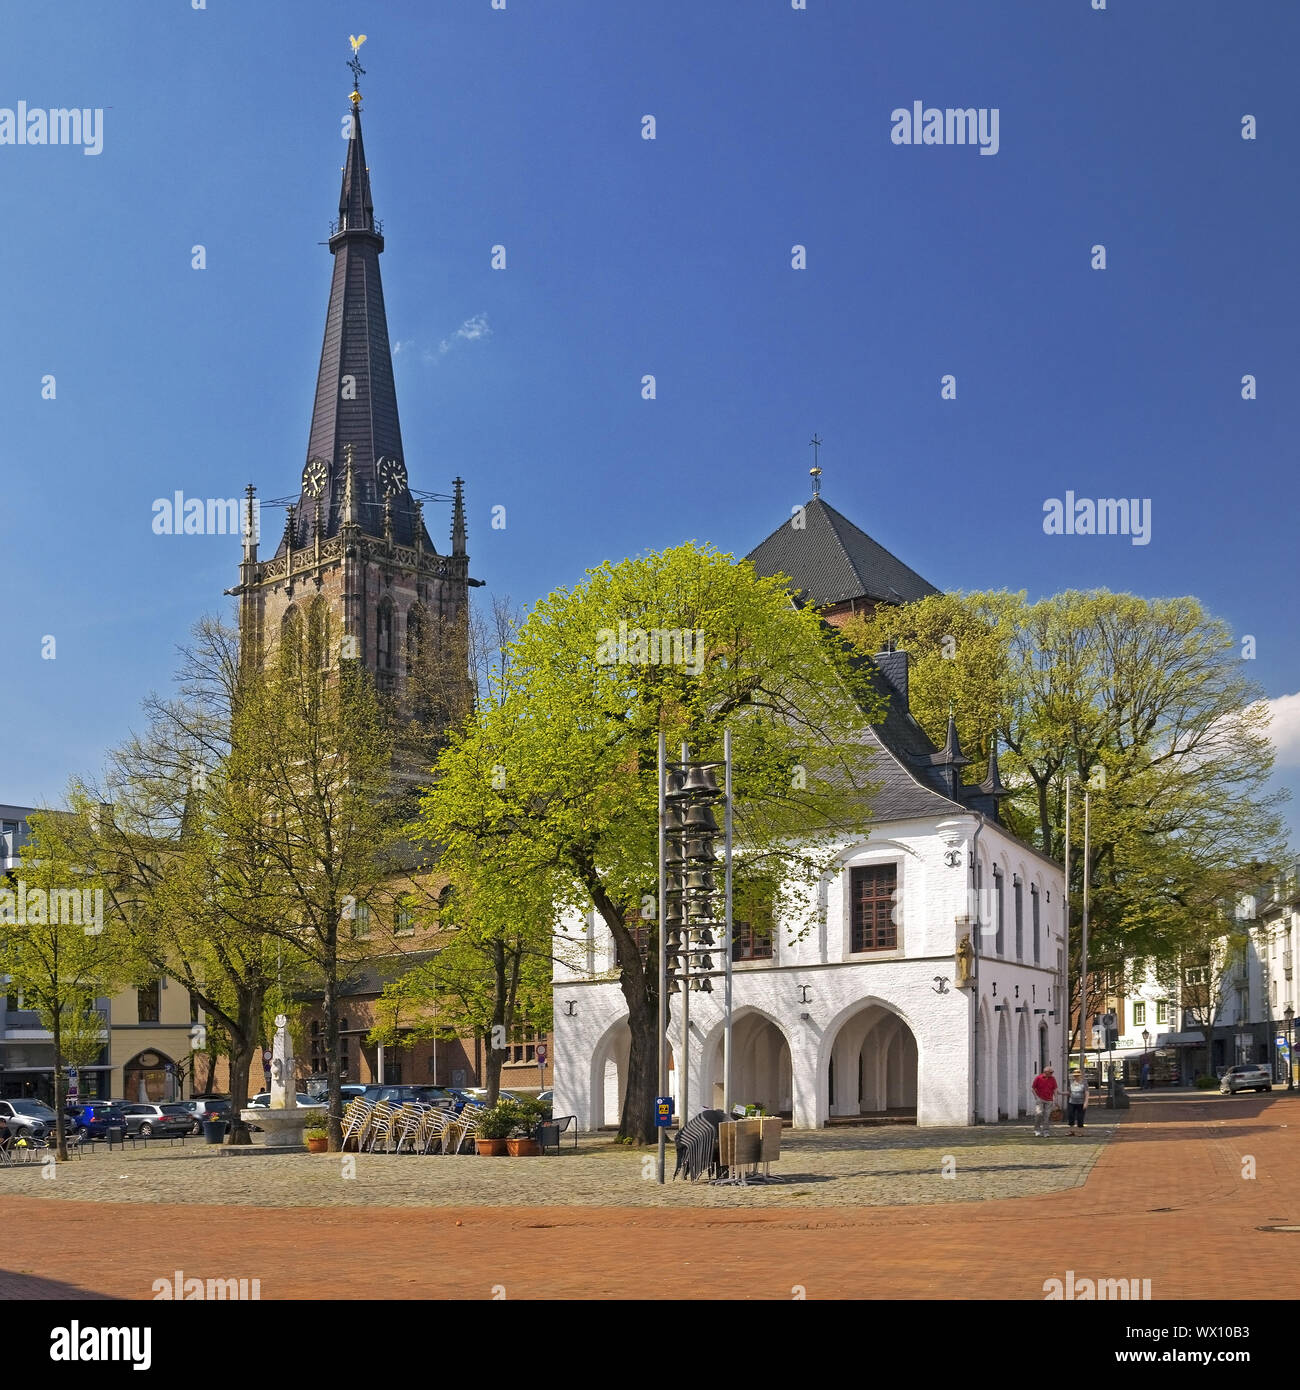 L'église St Lambertus, old town hall, Erkelenz, Bas-rhin, Nordrhein-Westfalen, Germany, Europe Banque D'Images